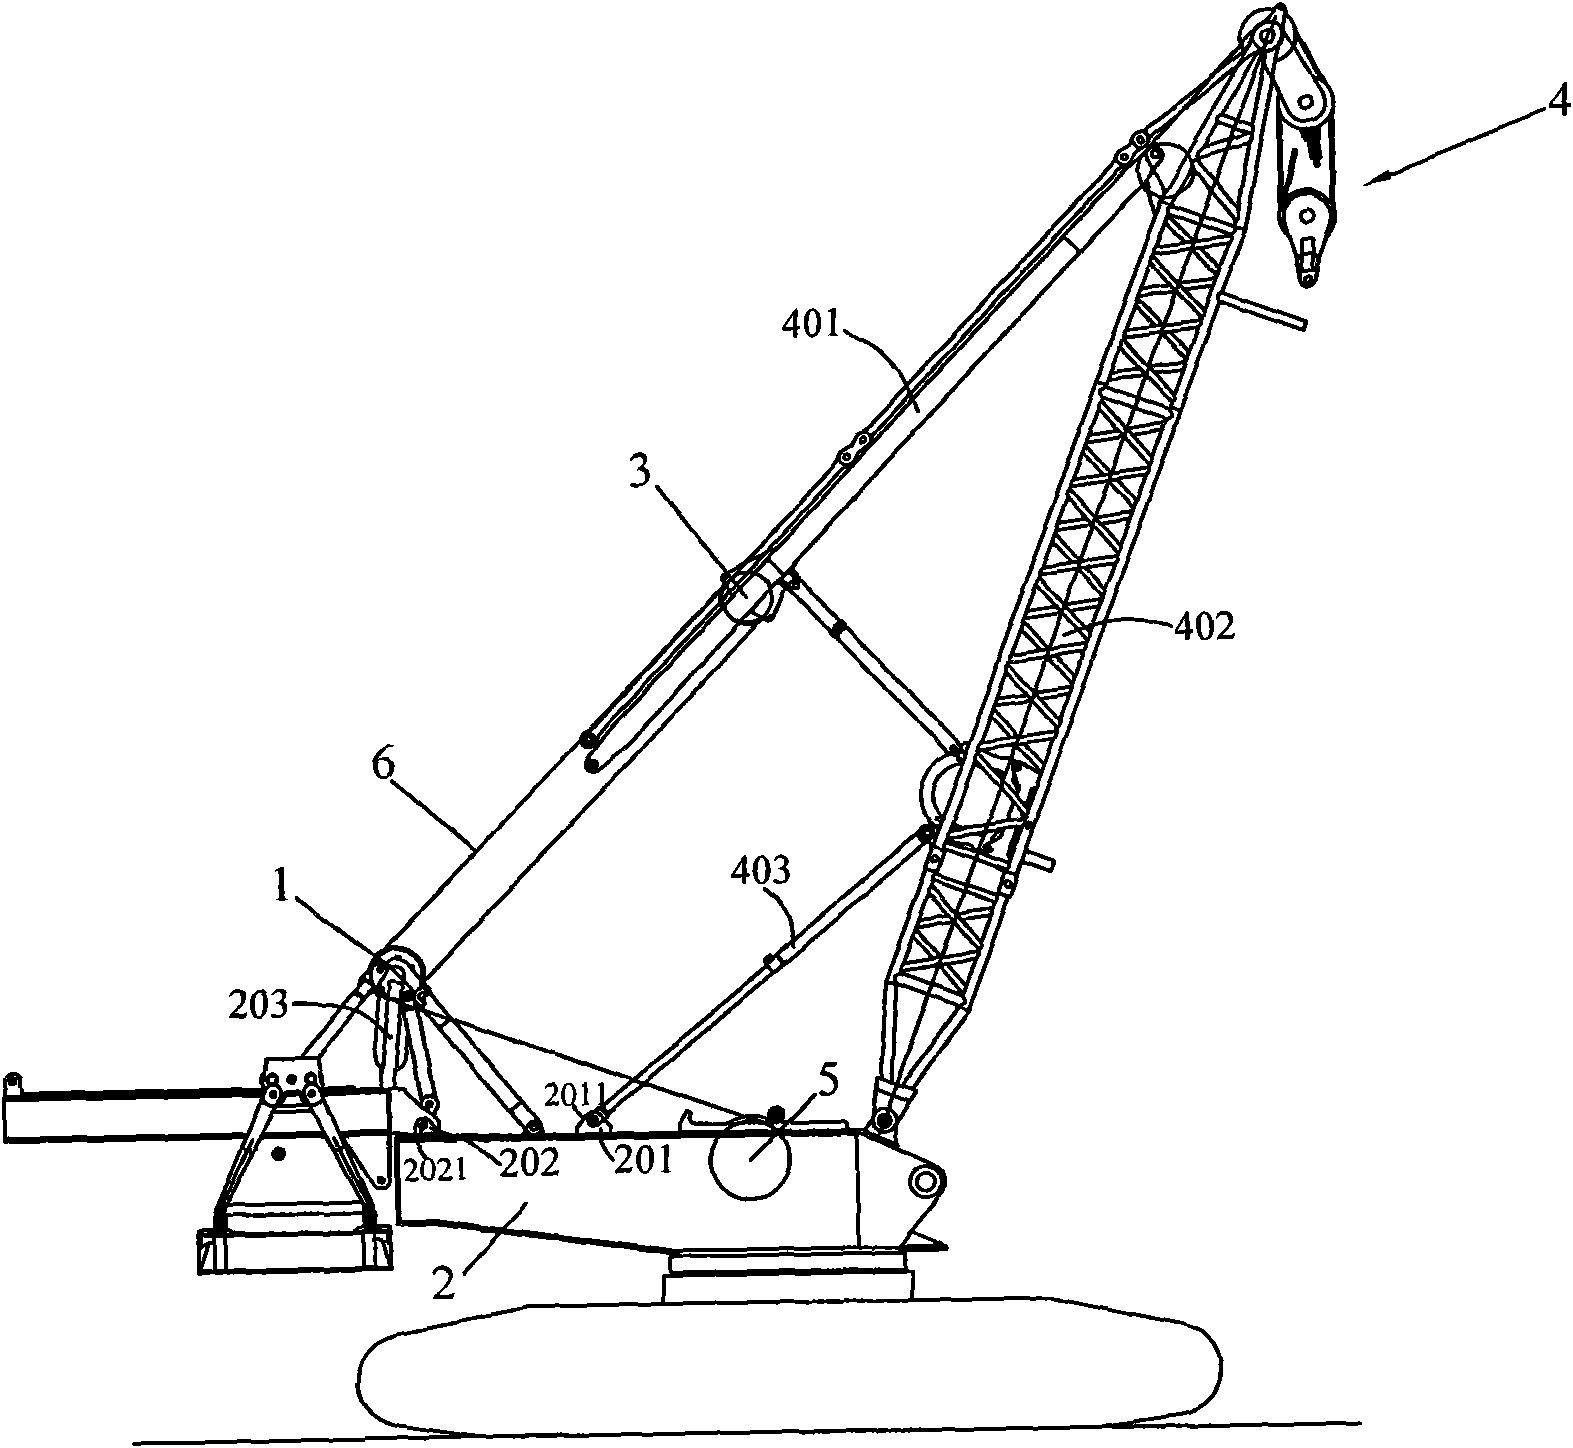 Installation method and device of caterpillar crane mast